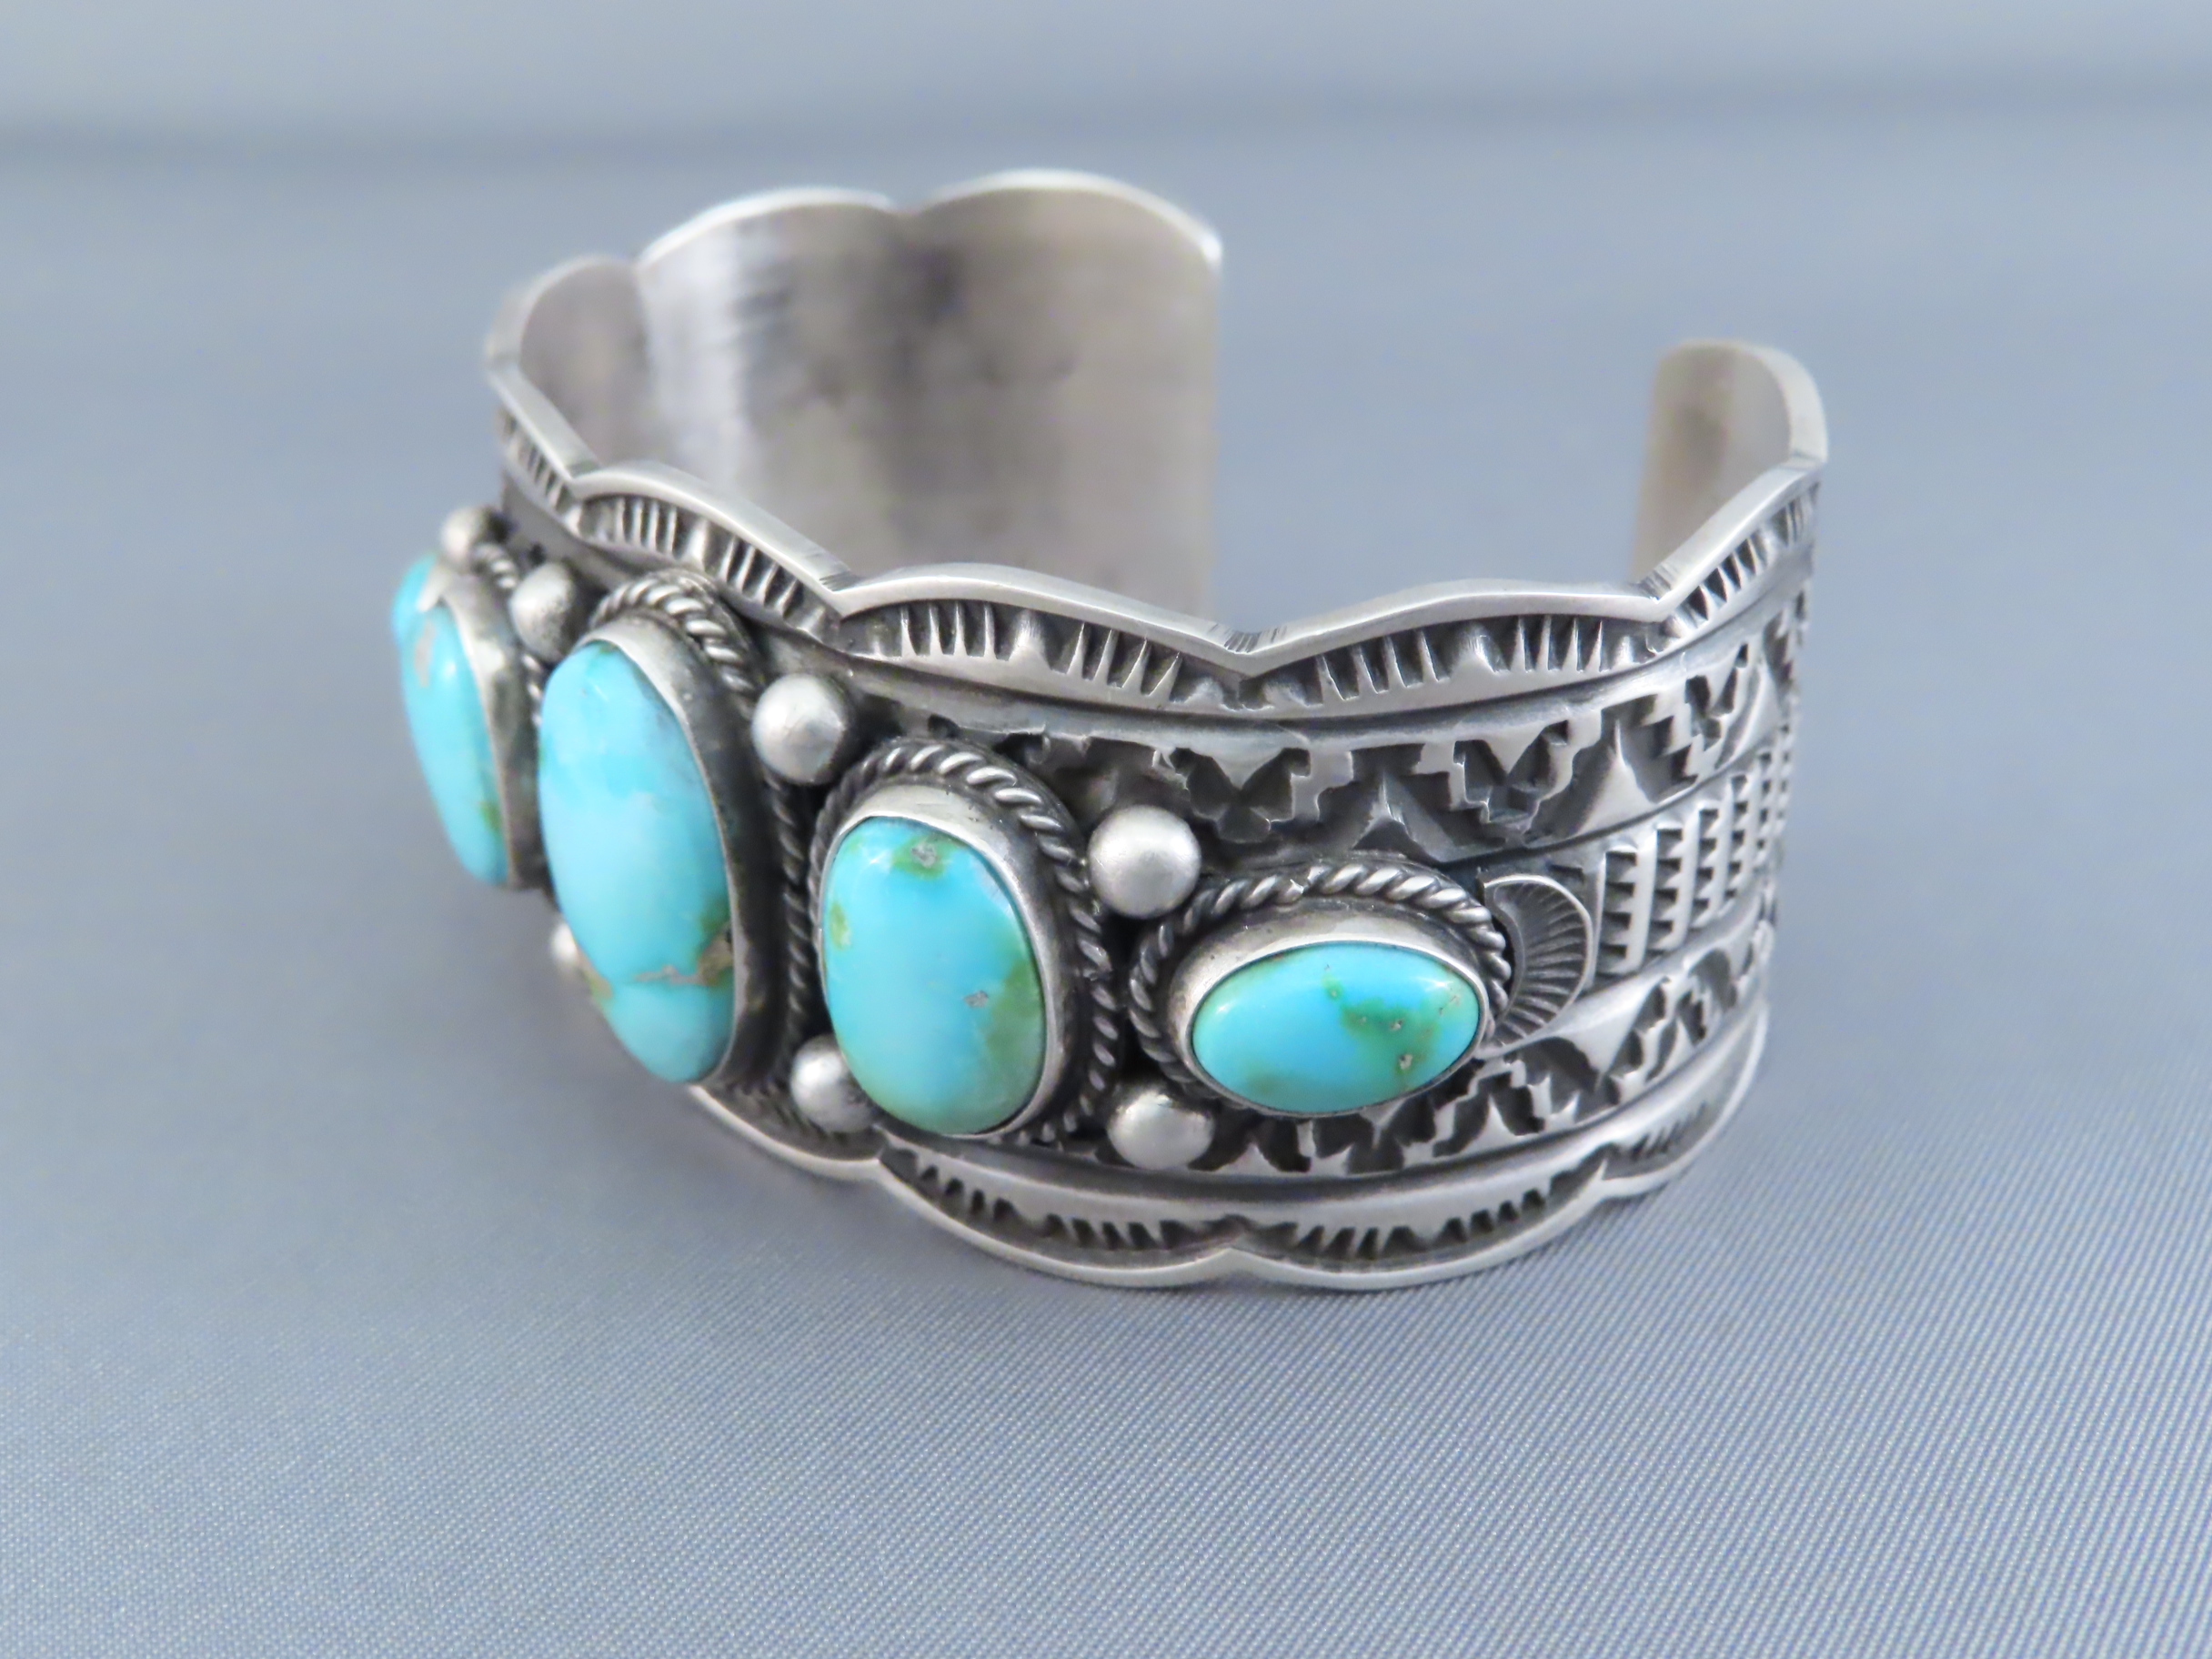 Sonoran Gold Turquoise Cuff Bracelet - Navajo Jewelry - Turquoise Bracelet